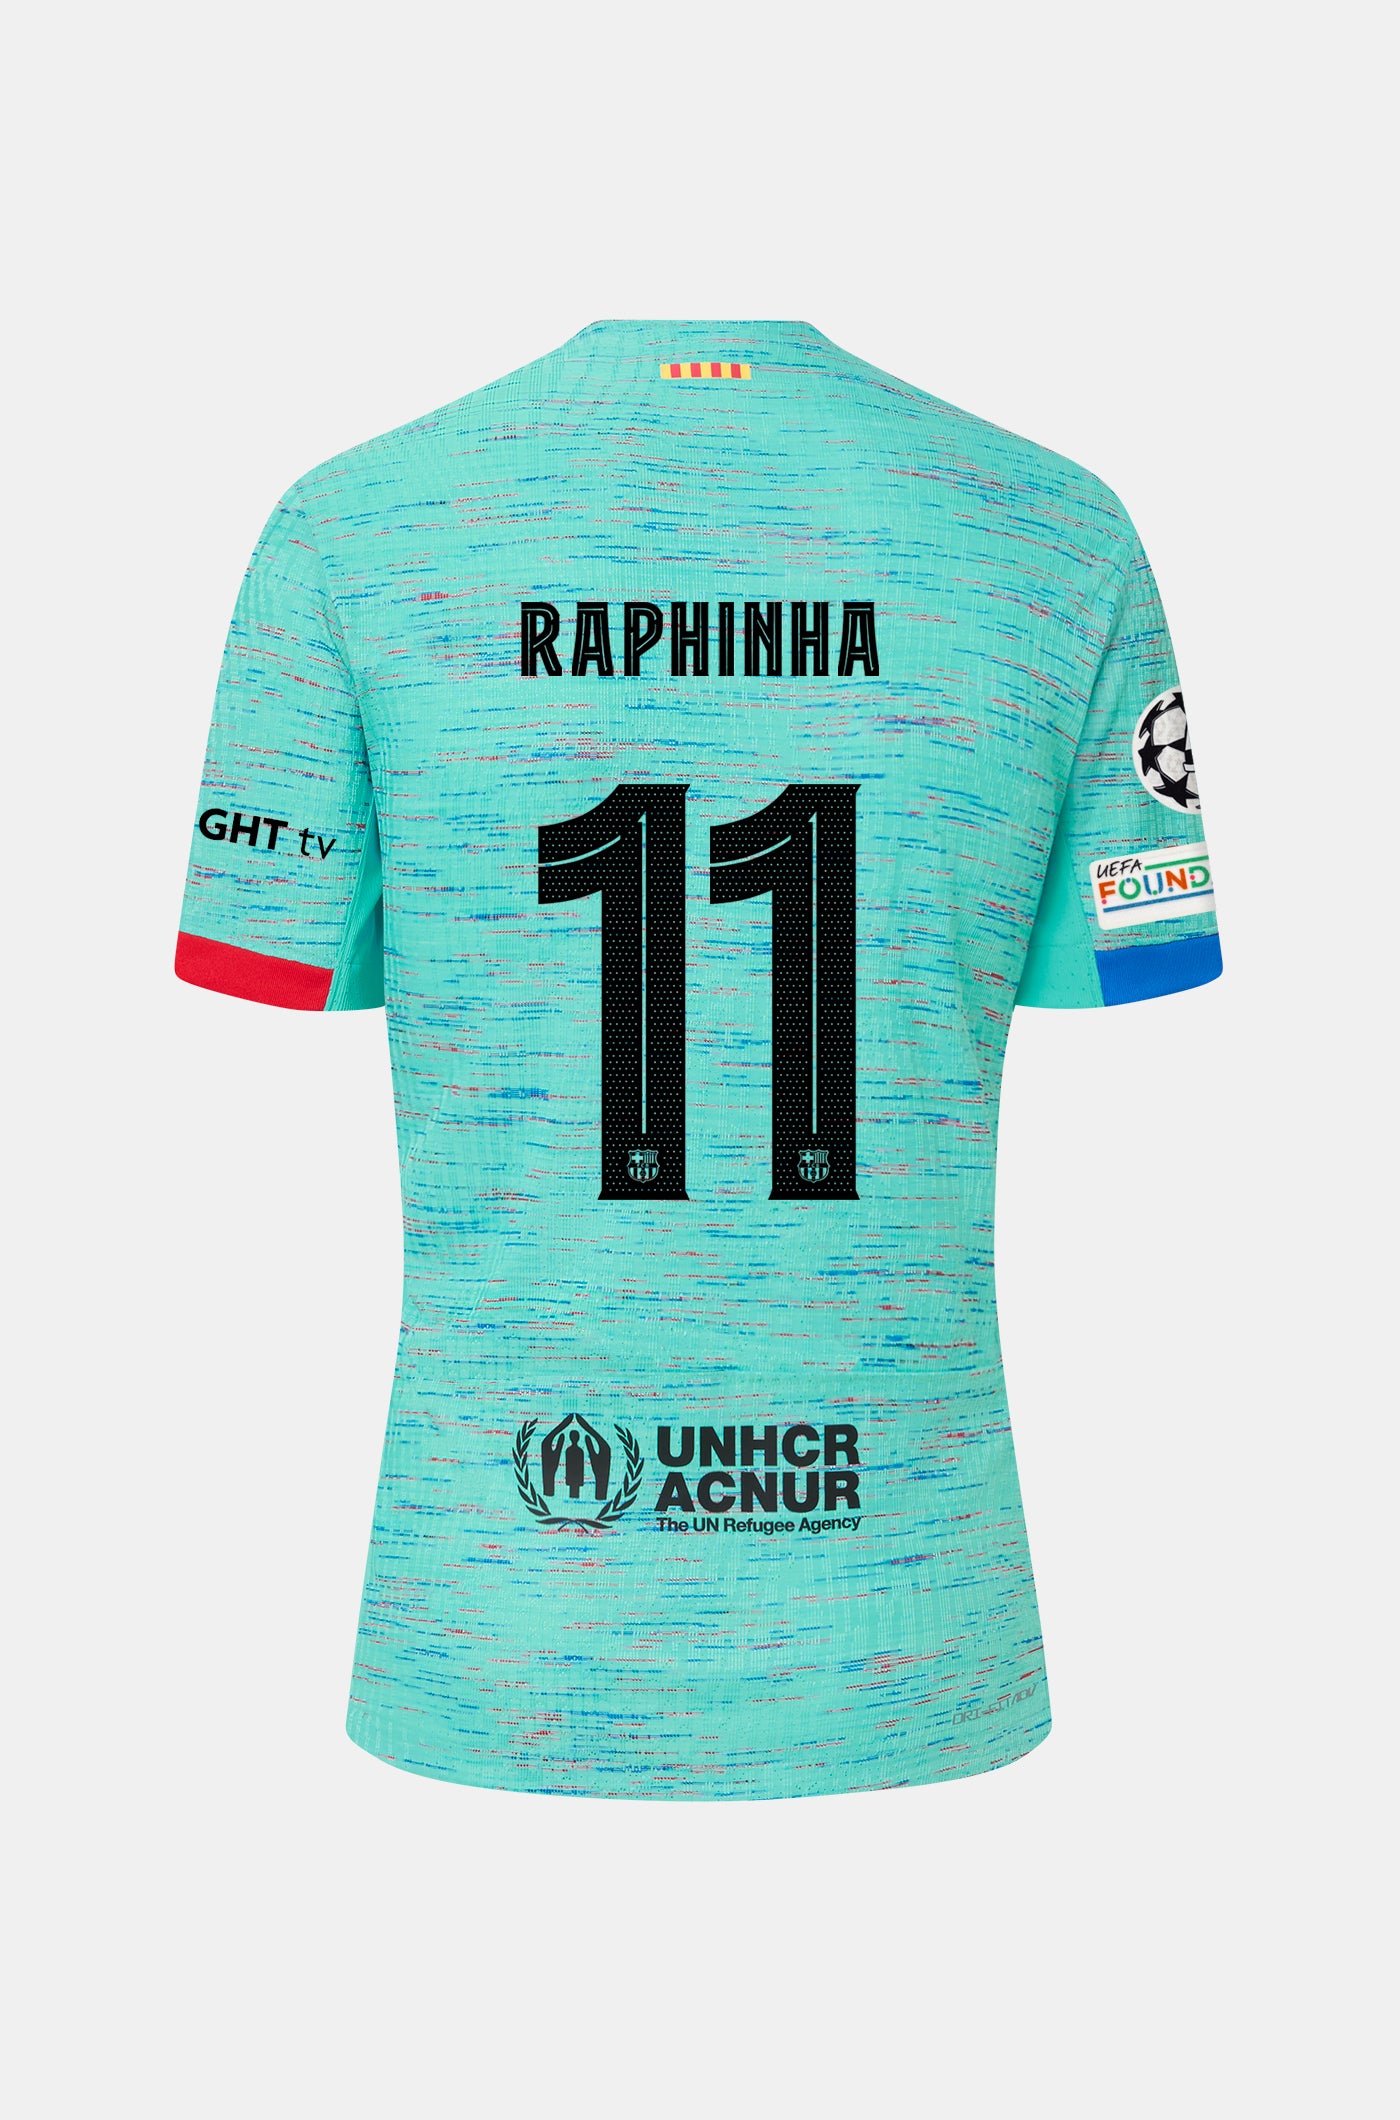 UCL FC Barcelona third shirt 23/24 Player’s Edition - RAPHINHA